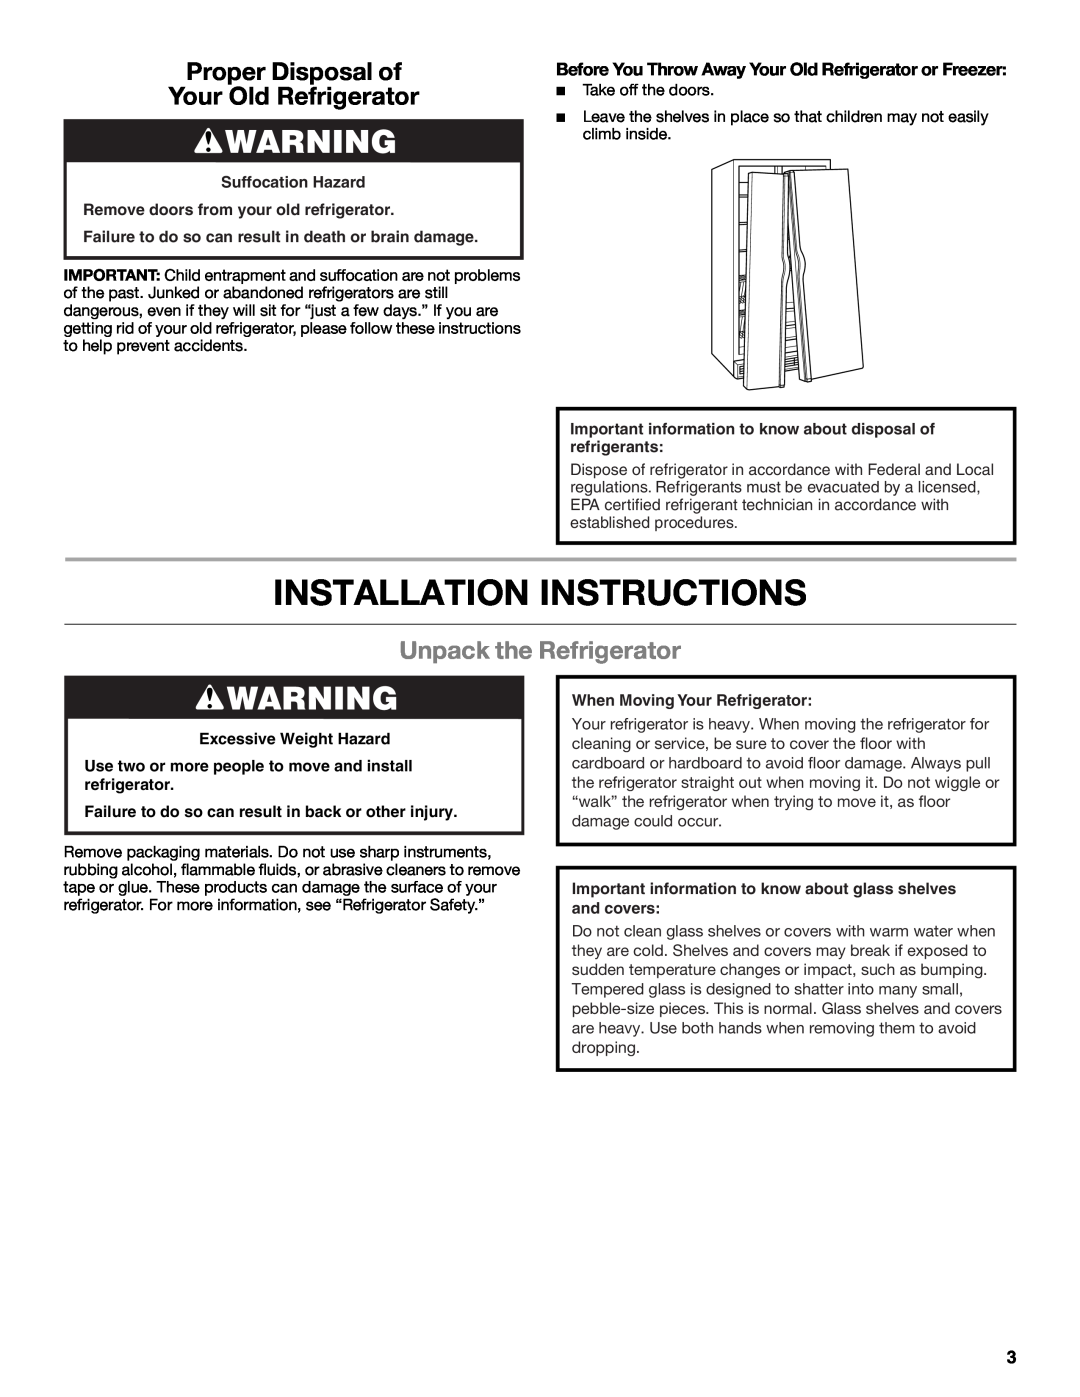 Whirlpool ED2KHAXVB Installation Instructions, Proper Disposal of Your Old Refrigerator, Unpack the Refrigerator 